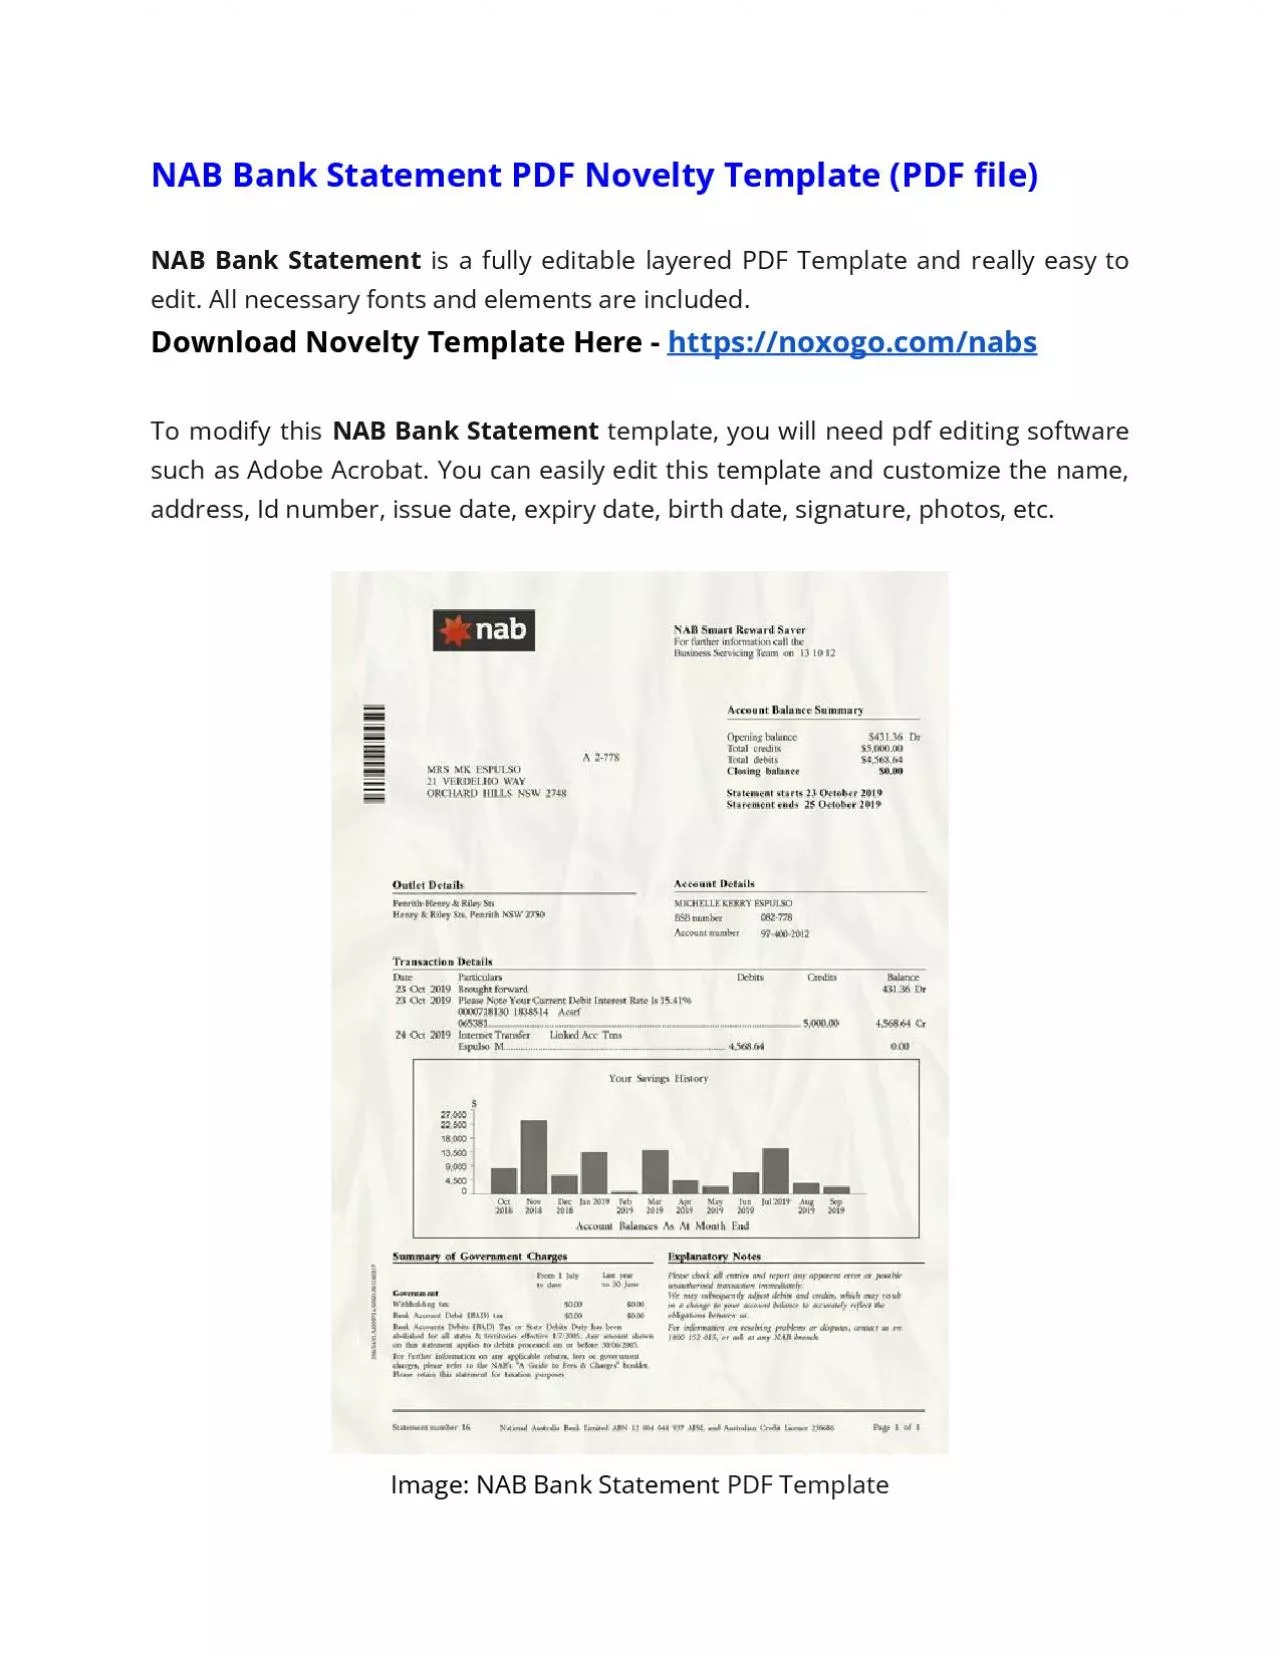 NAB Bank Statement PDF Novelty Template